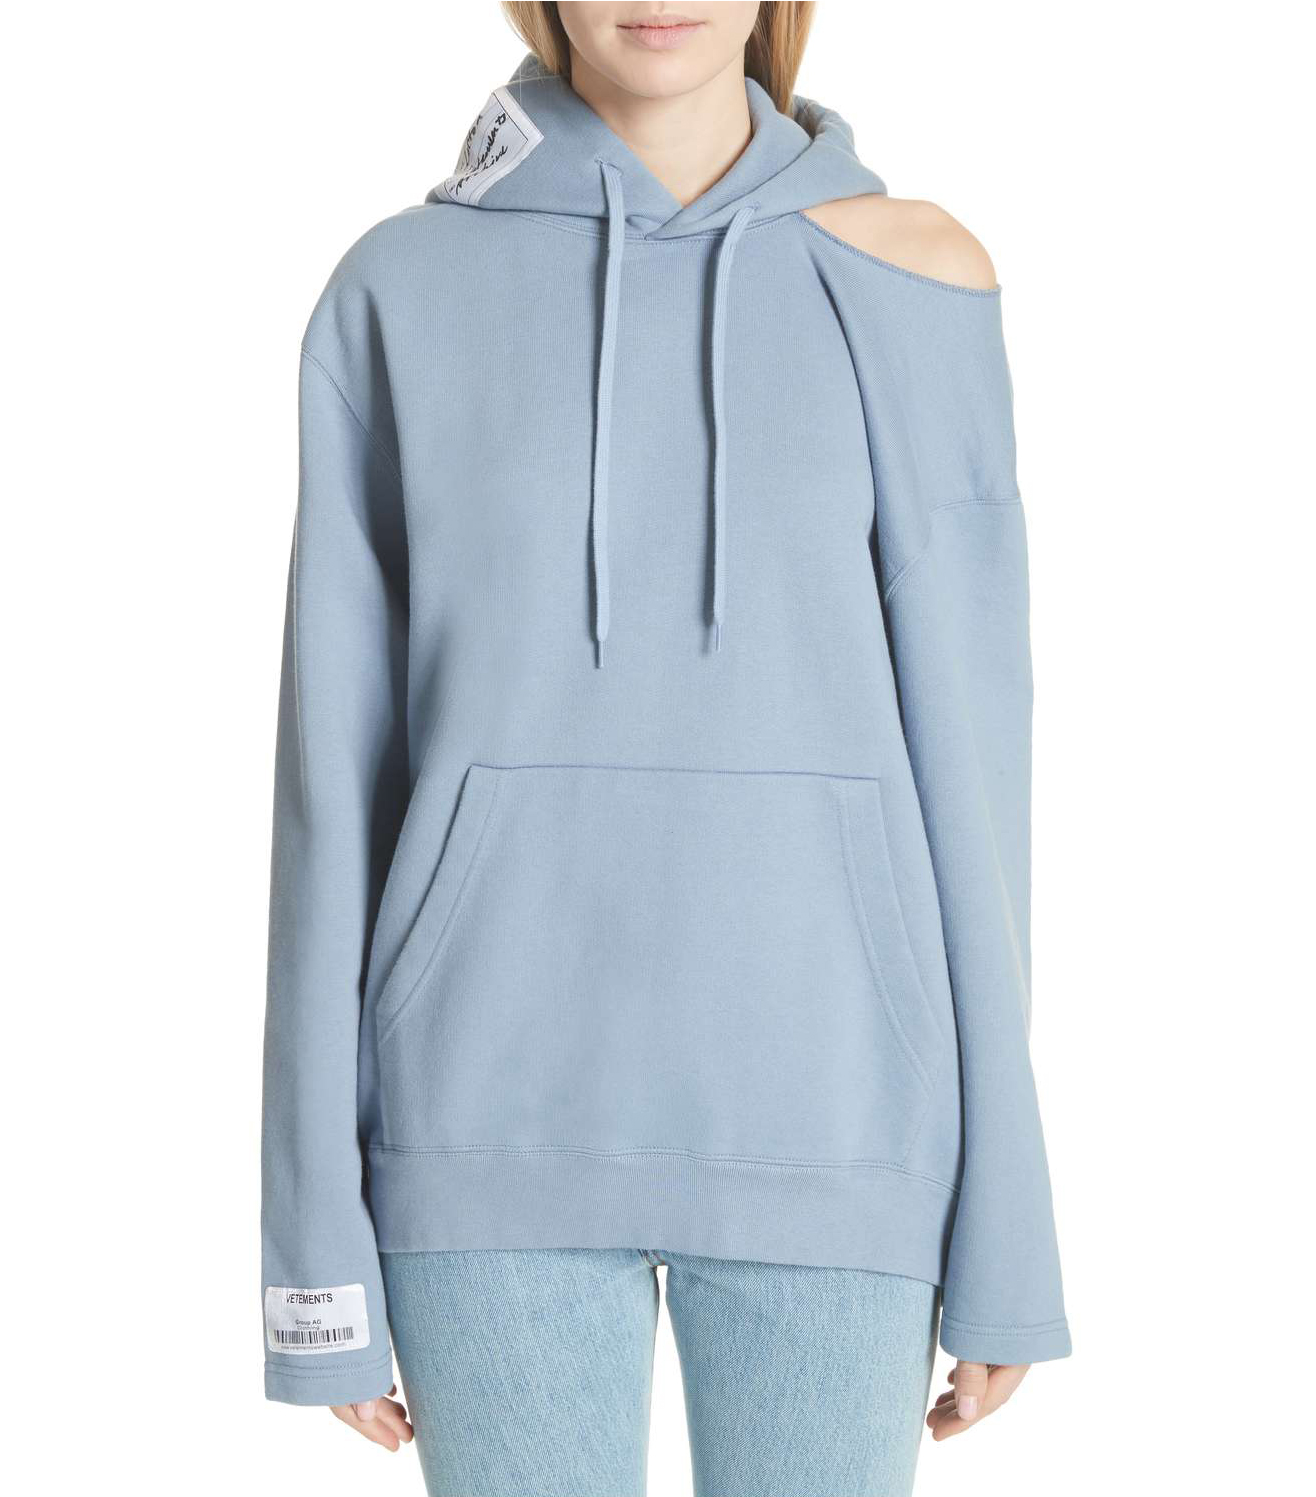 Ulanda Pullover Hoodie Sweatshirt Oversized Hoodie for Women Fashion Long Sleeve Sweatshirt Hoodie Top with Pockets 